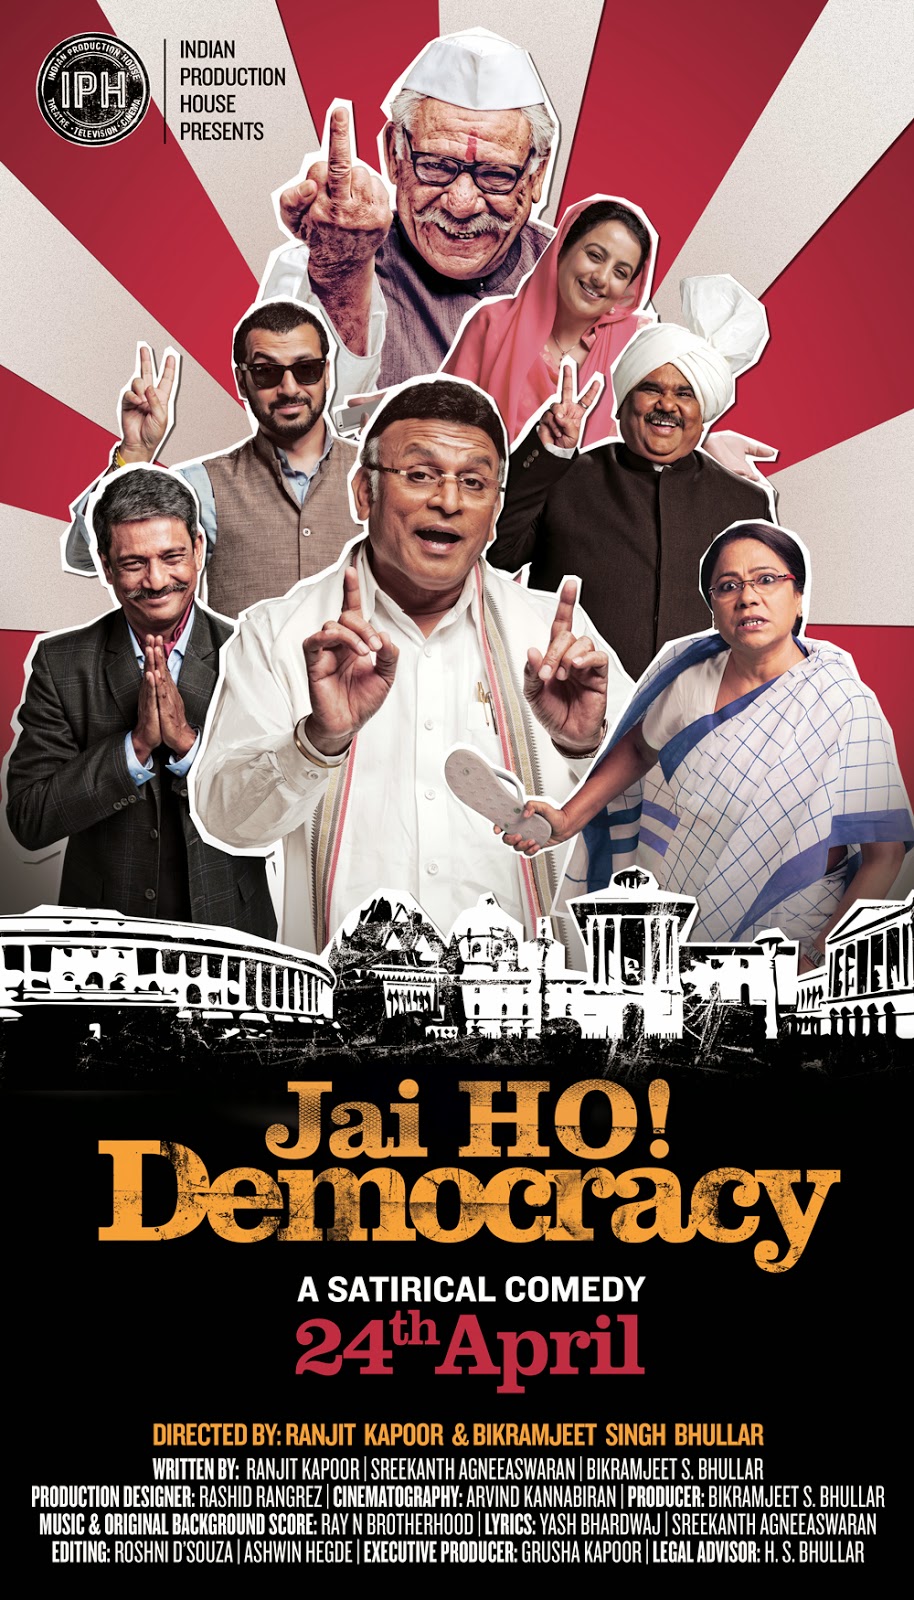 Jai Ho! Democracy, Directed by Ranjit Kapoor, starring Om Puri, Annu Kapoor, Seema Biswas, Adil Hussain and Satish Kaushik